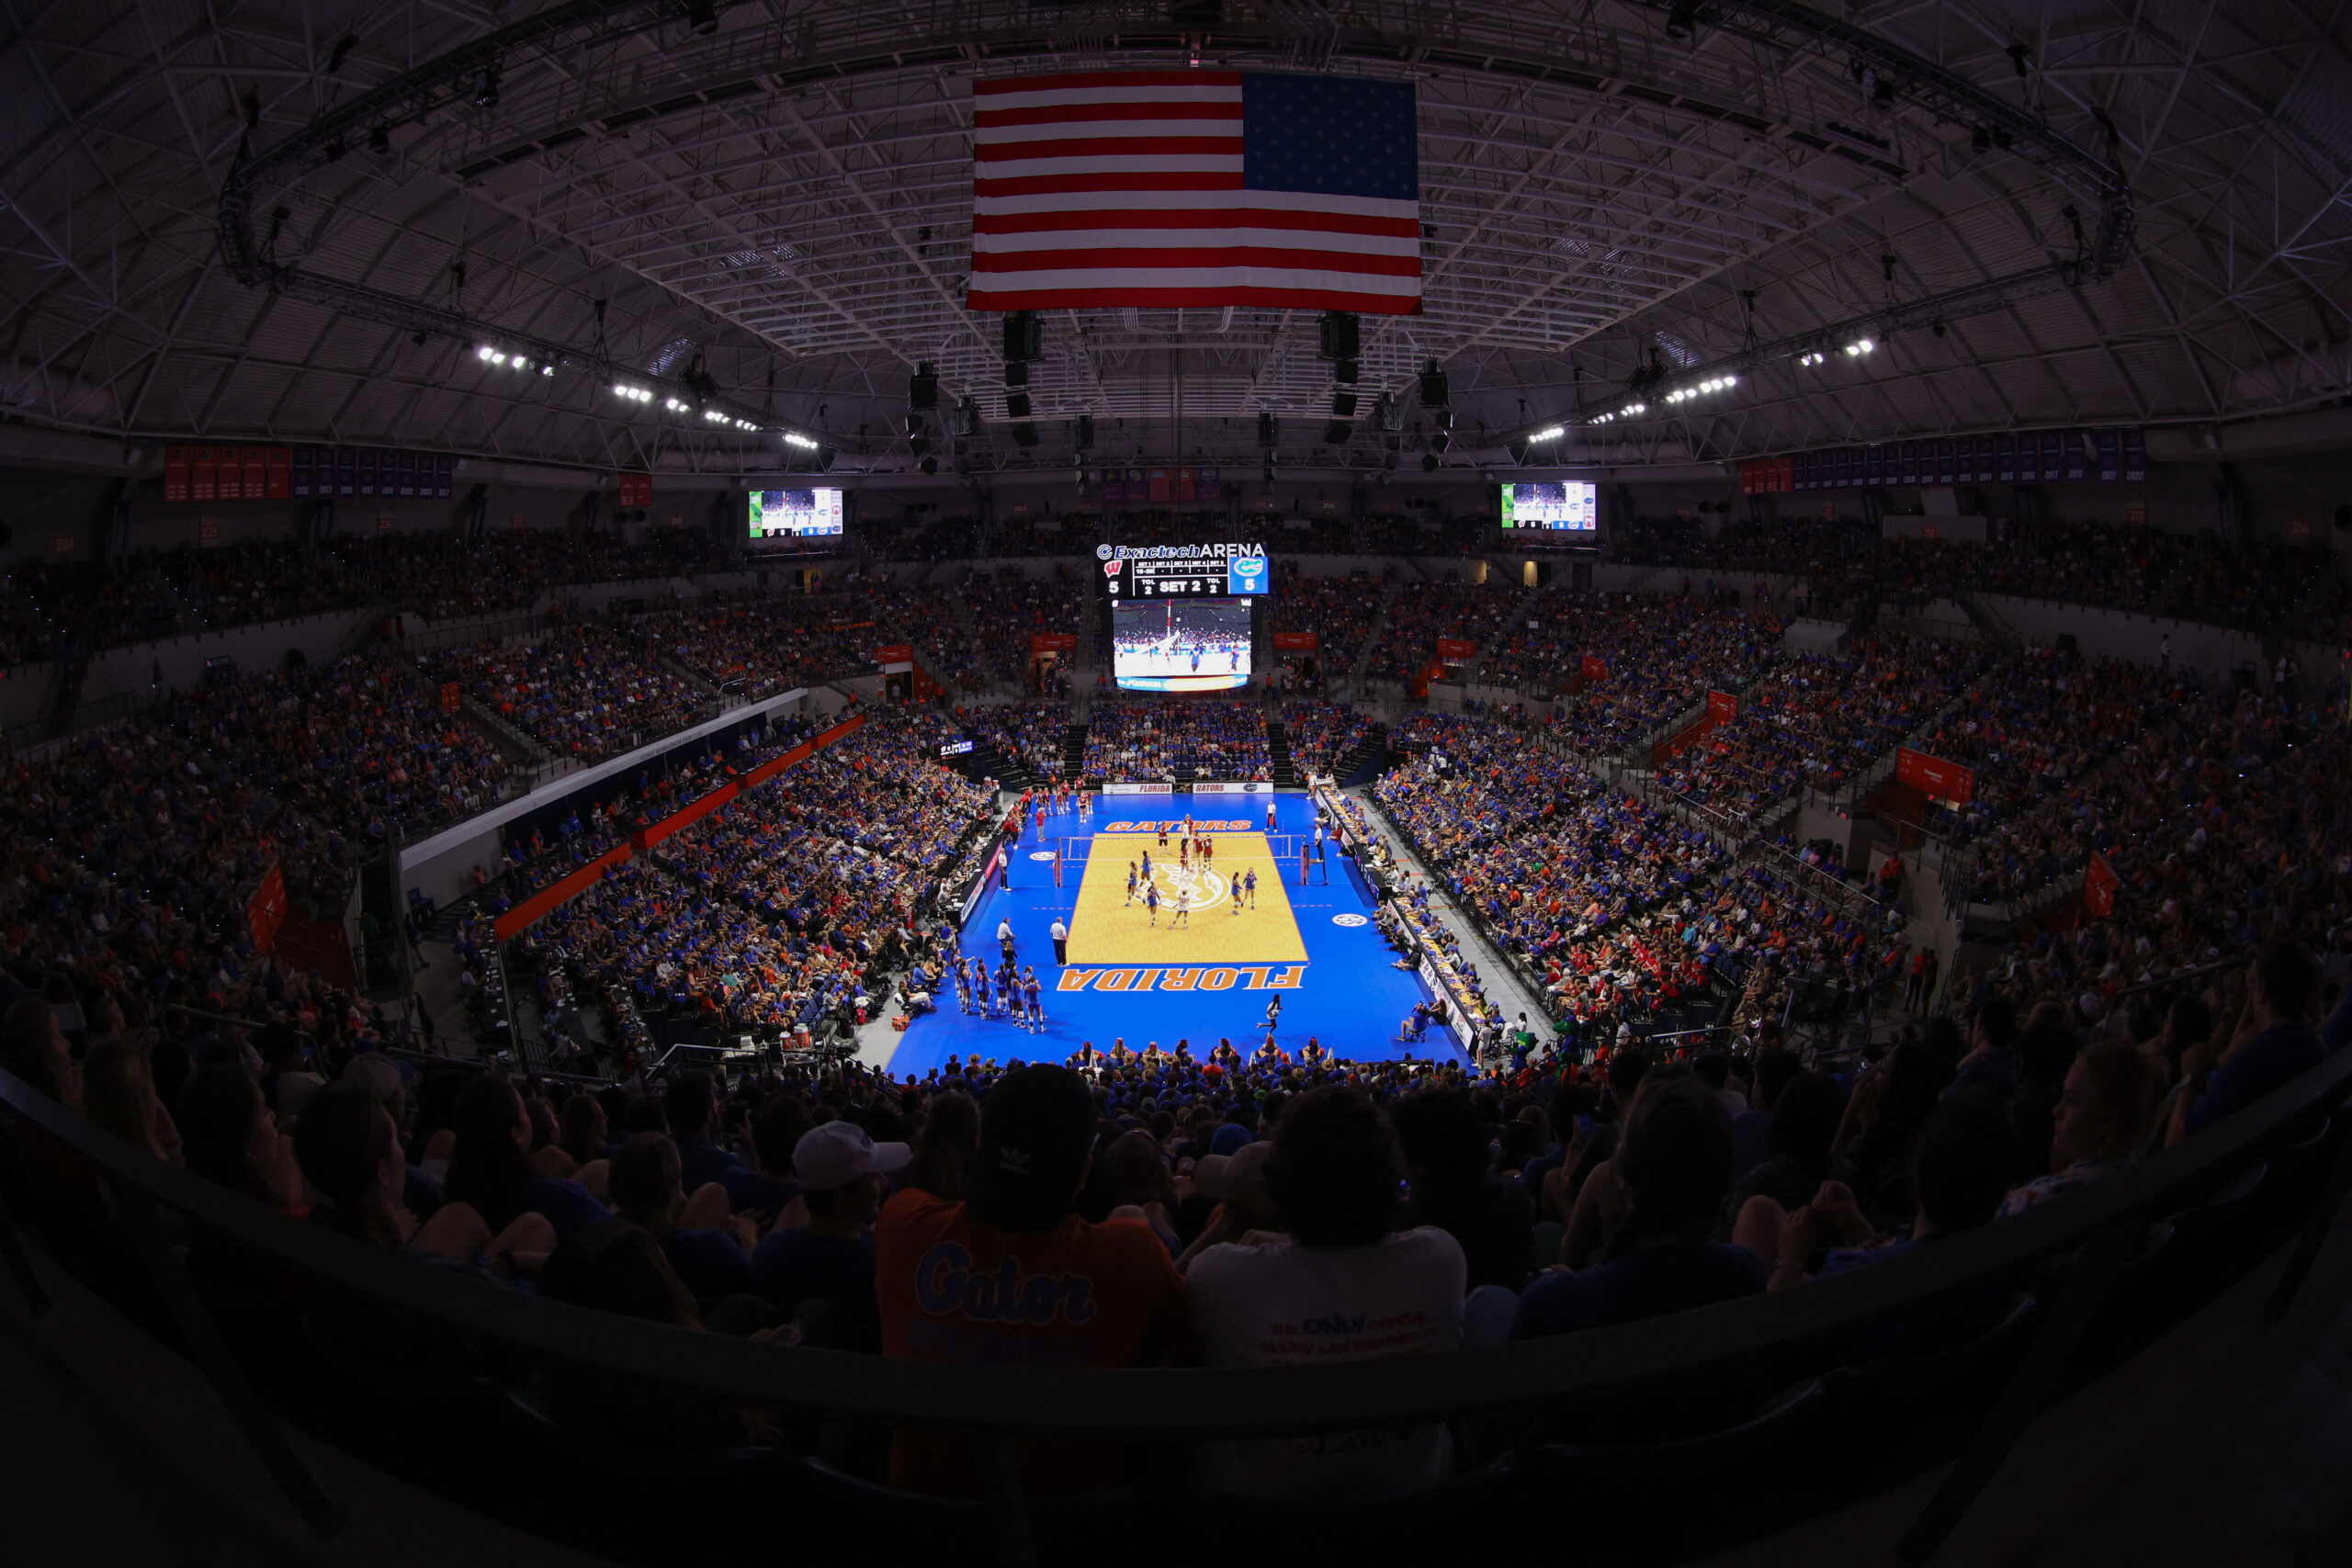 voleyball court at exactech arena